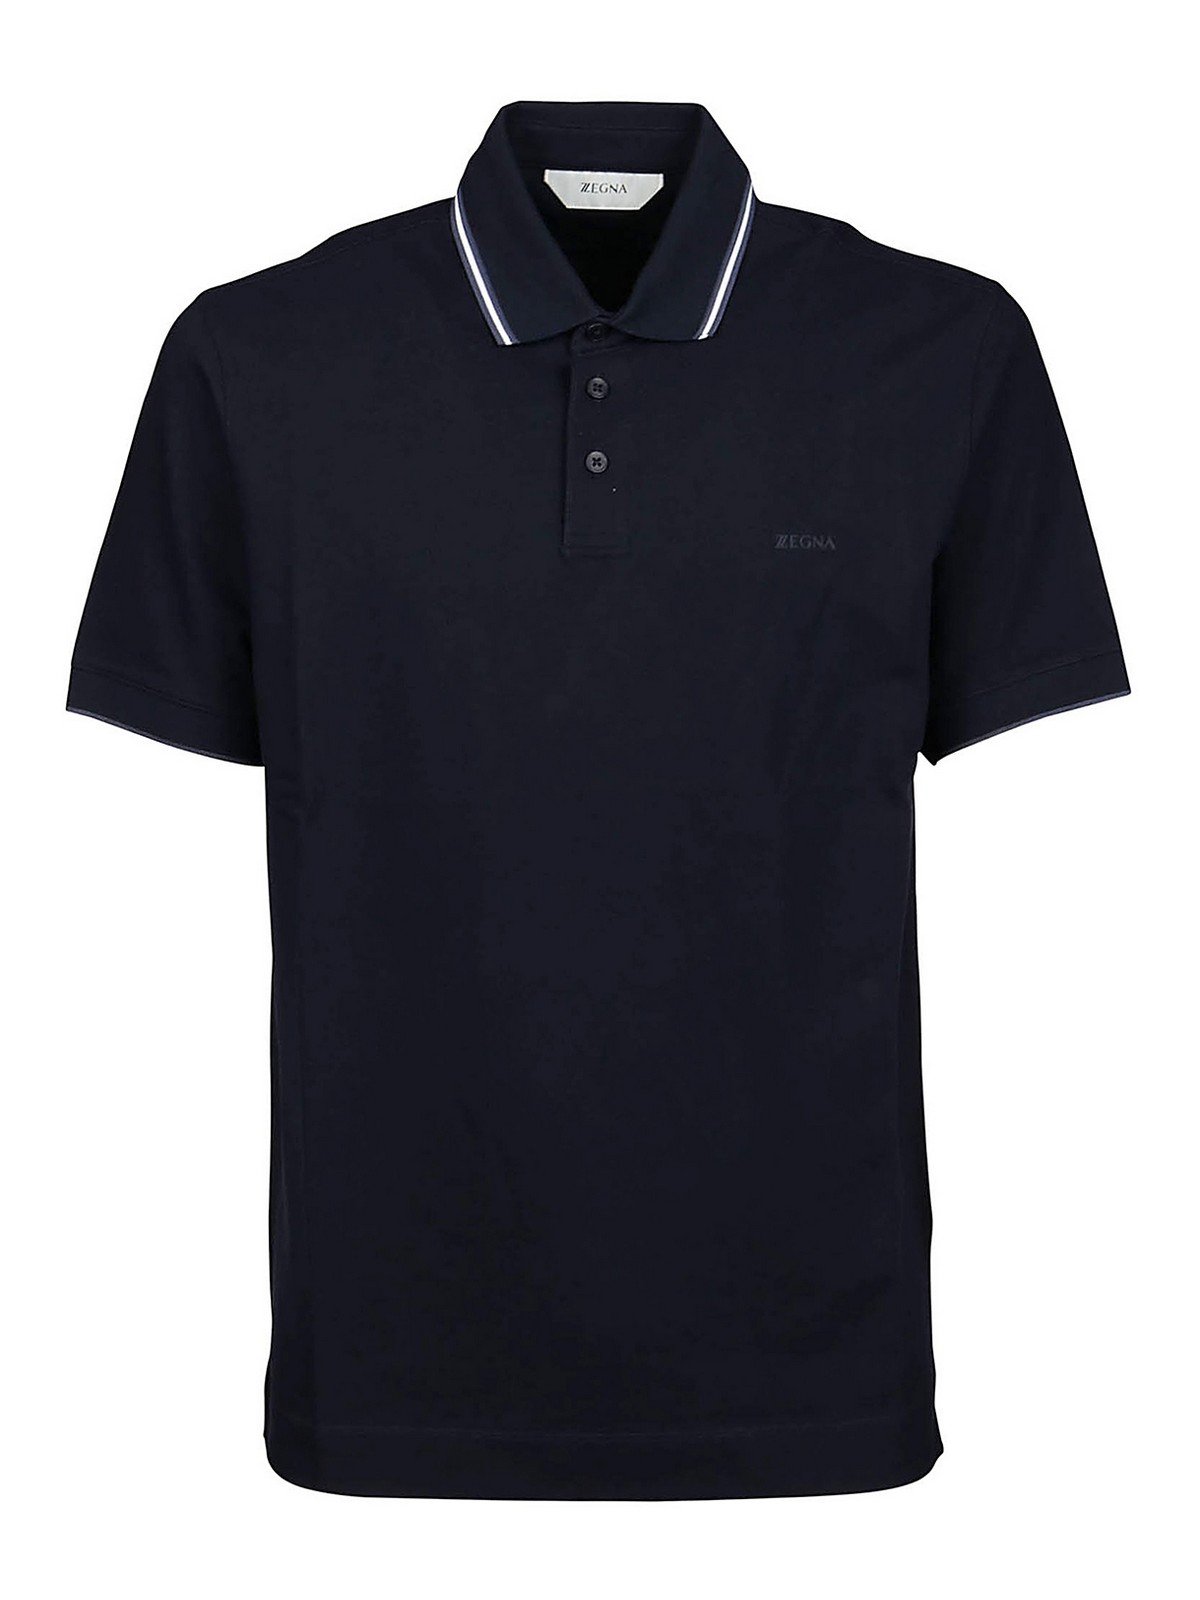 Z Zegna - Cotton polo shirt - polo shirts - ZZ661VV360B09 | iKRIX.com